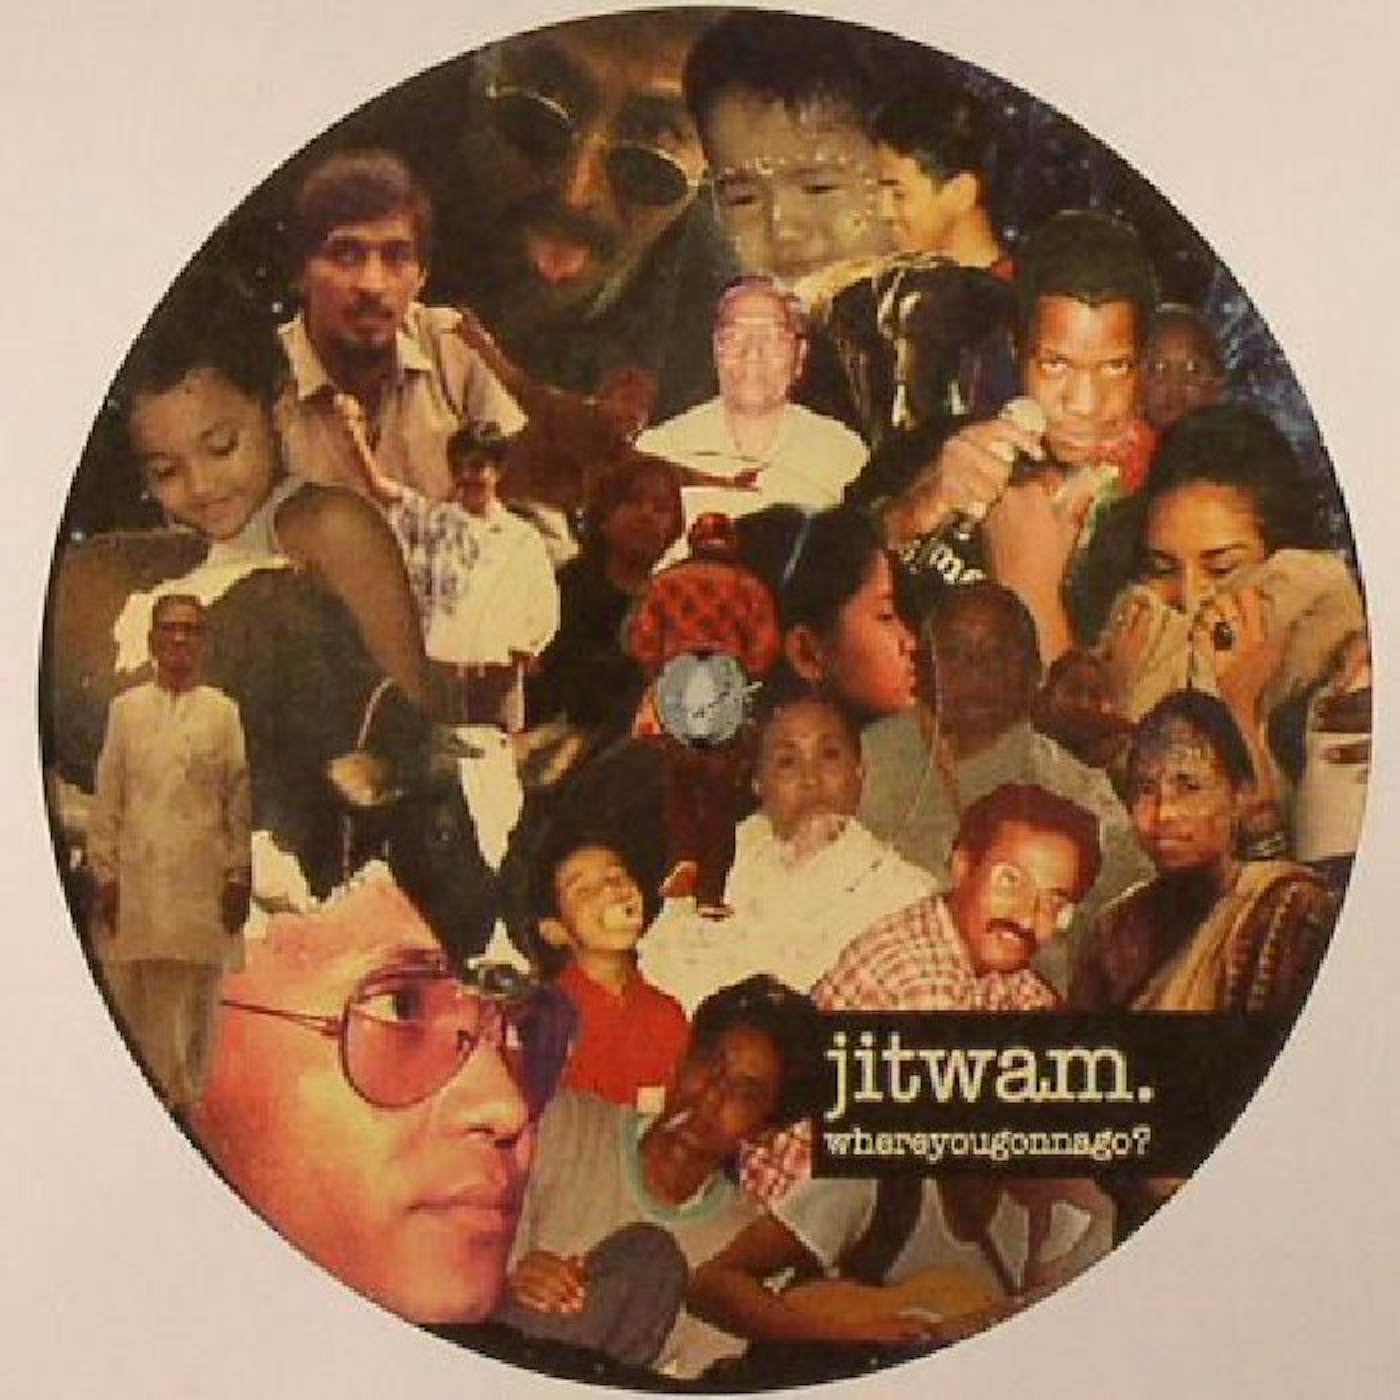 Jitwam WHEREYOUGONNAGO? Vinyl Record